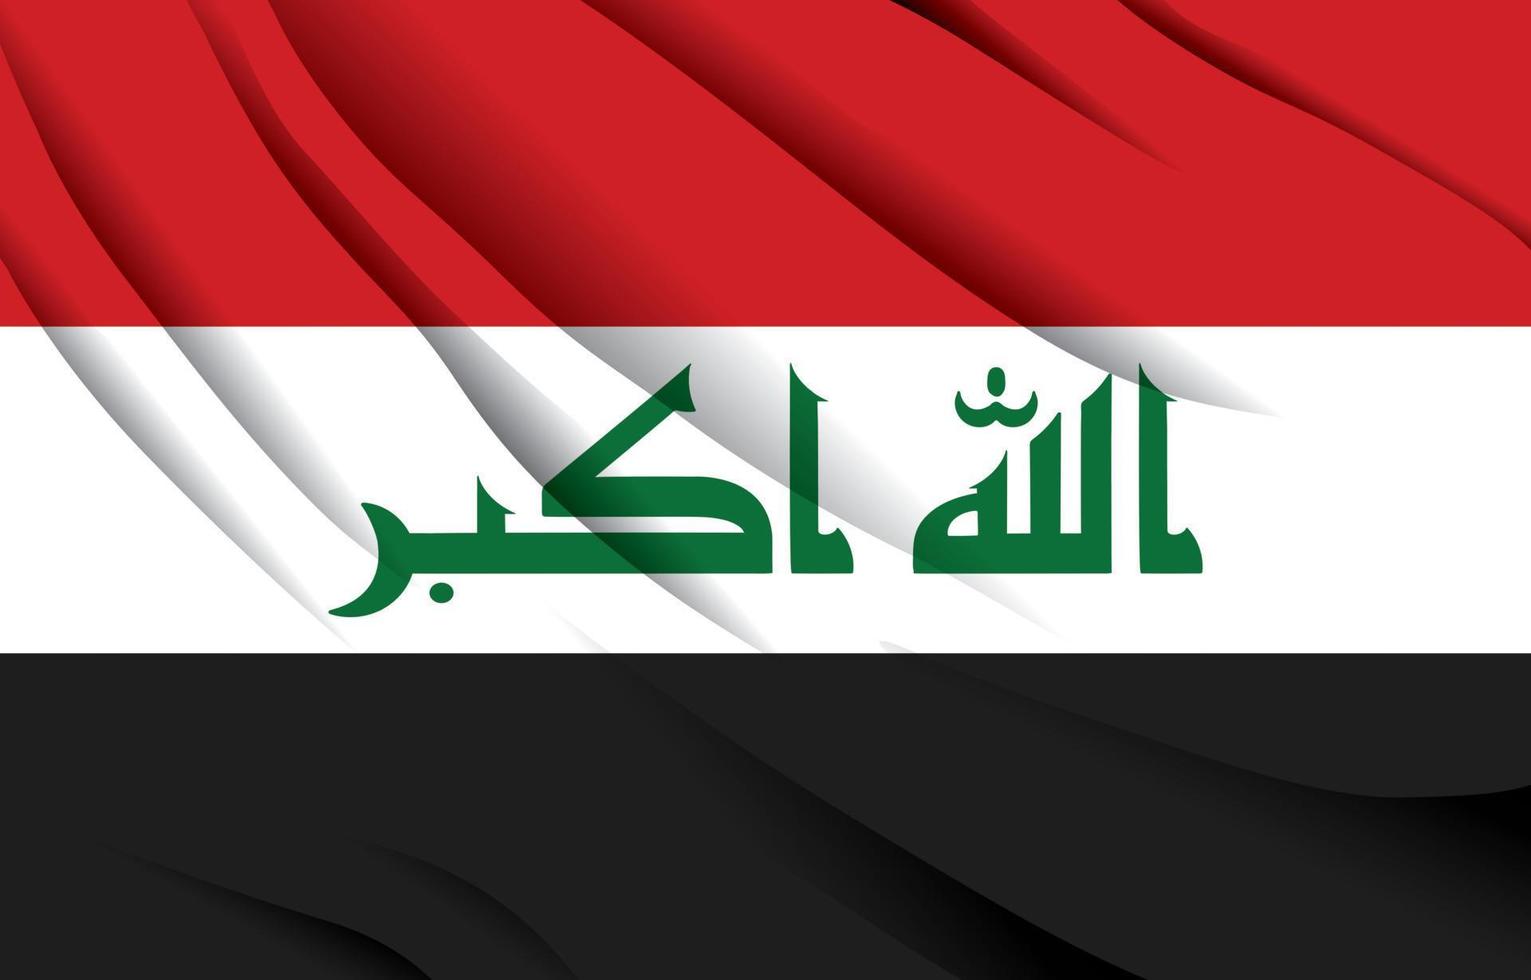 iraq national flag waving realistic vector illustration